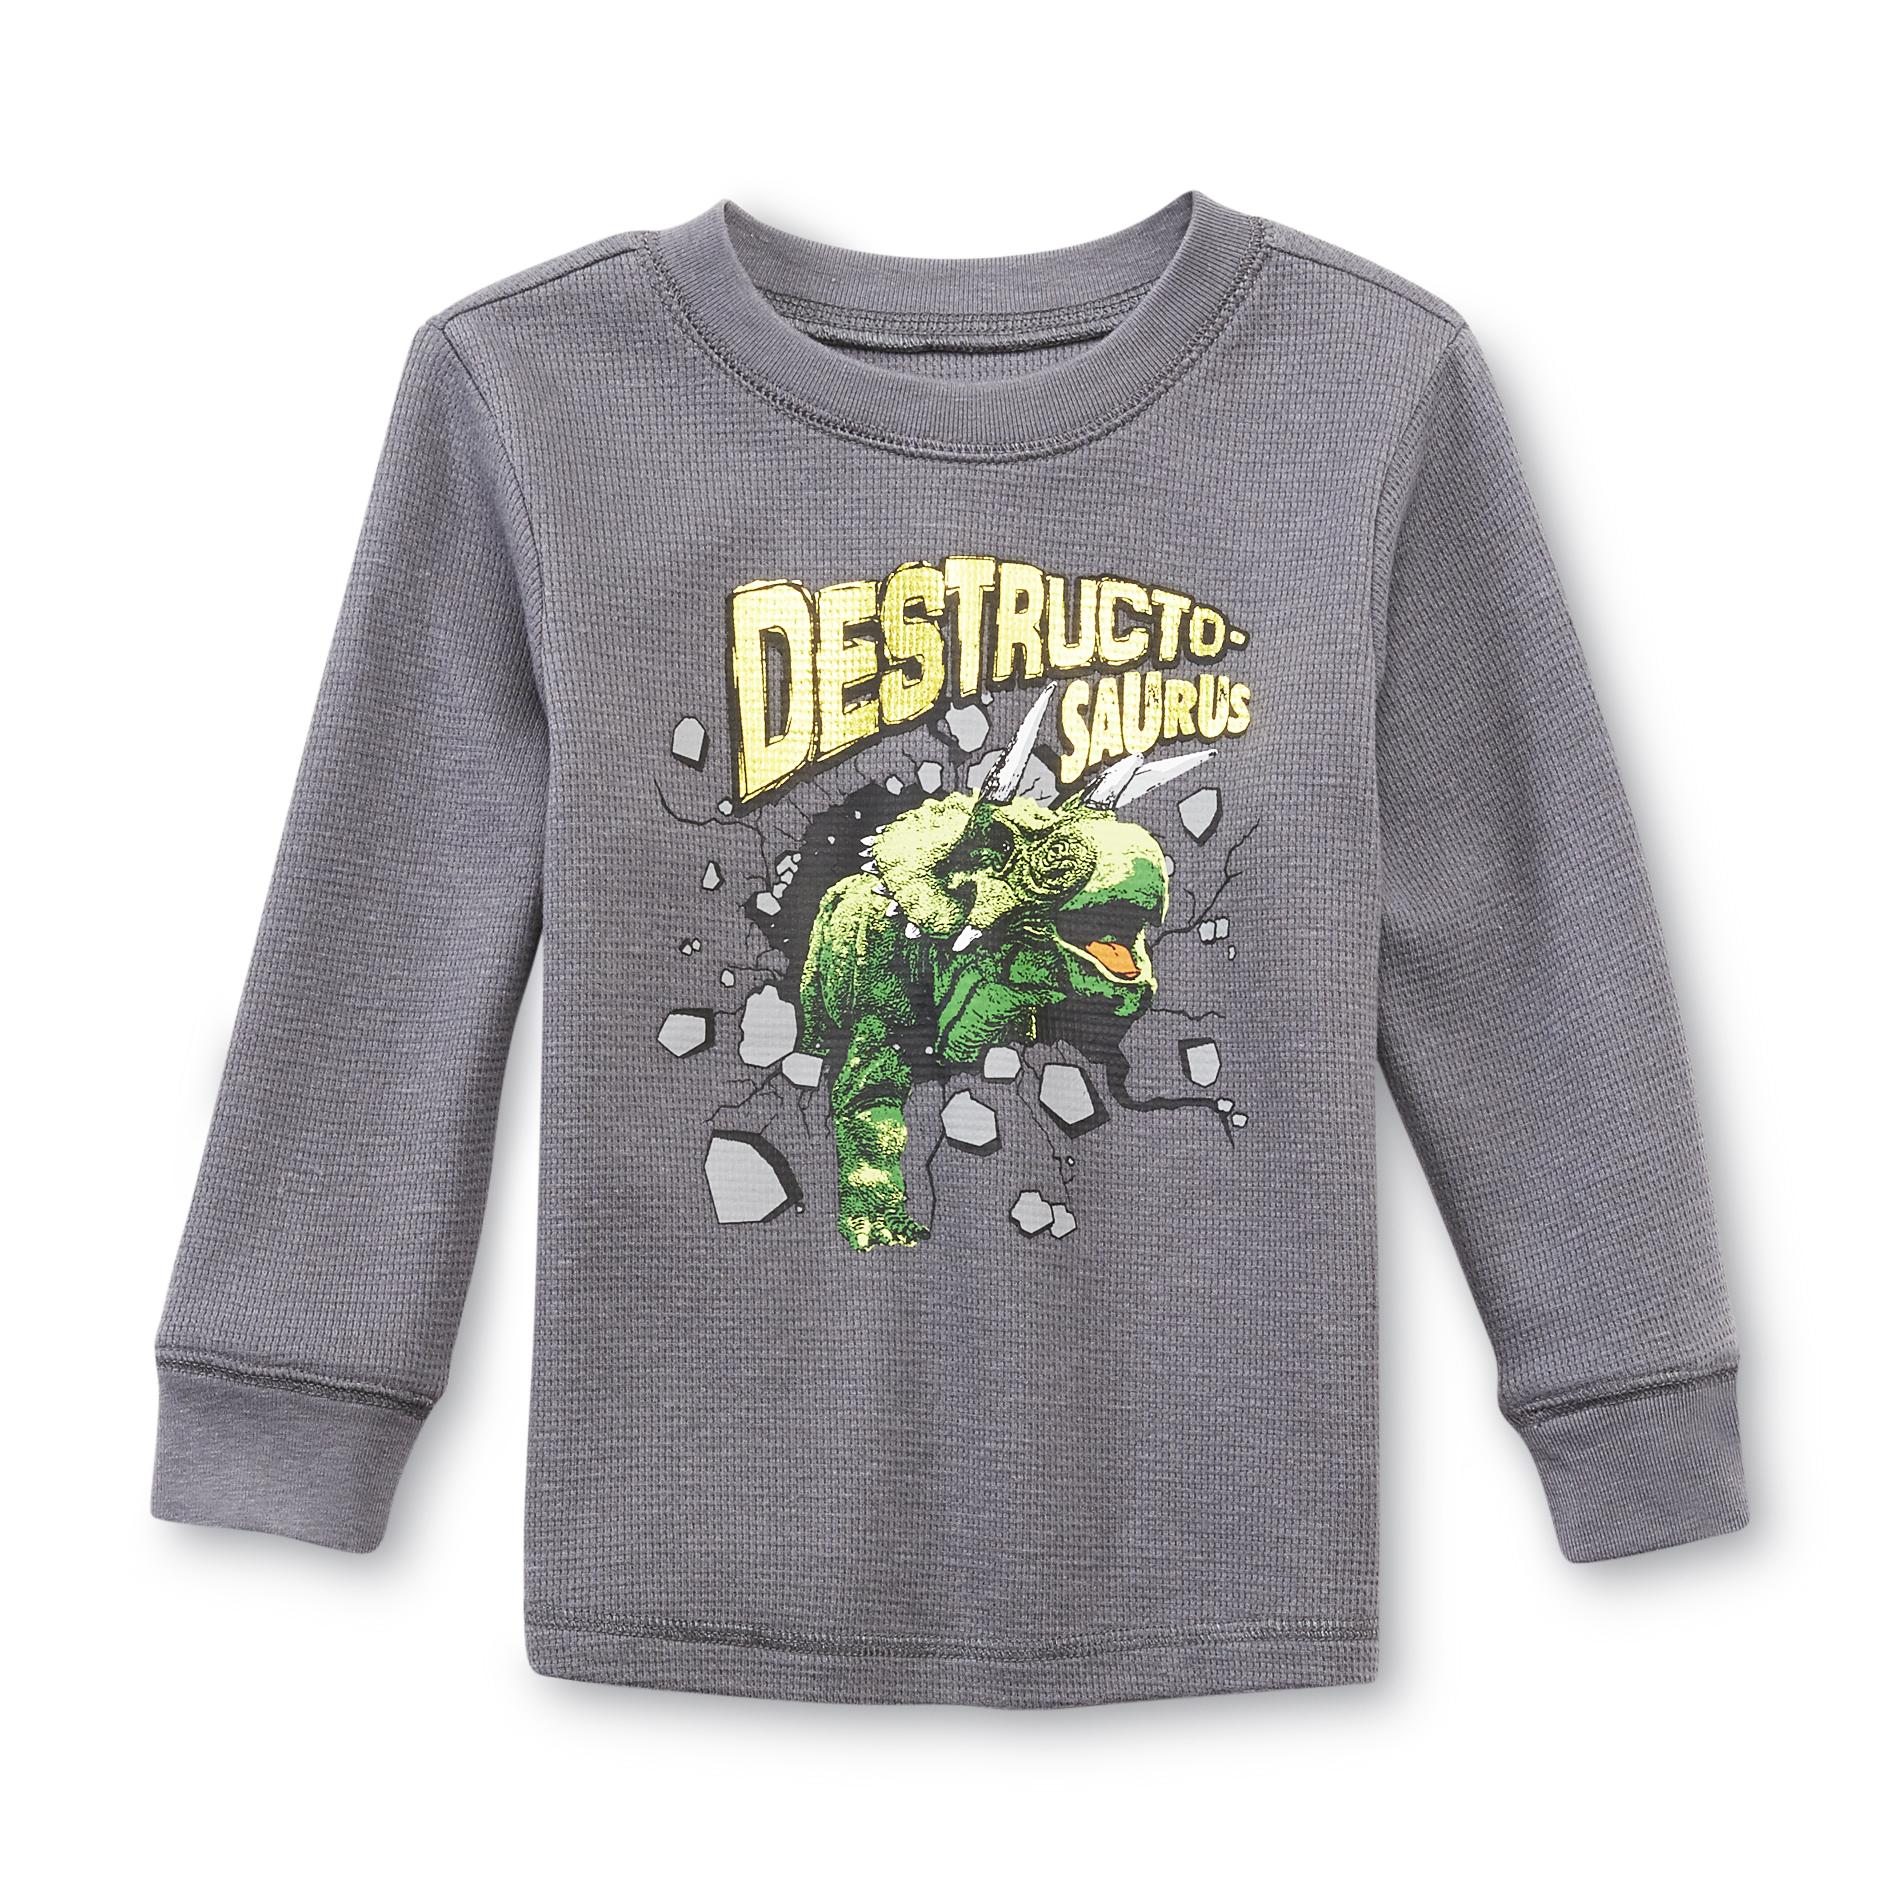 WonderKids Infant & Toddler Boy's Thermal Graphic T-Shirt - Dinosaur